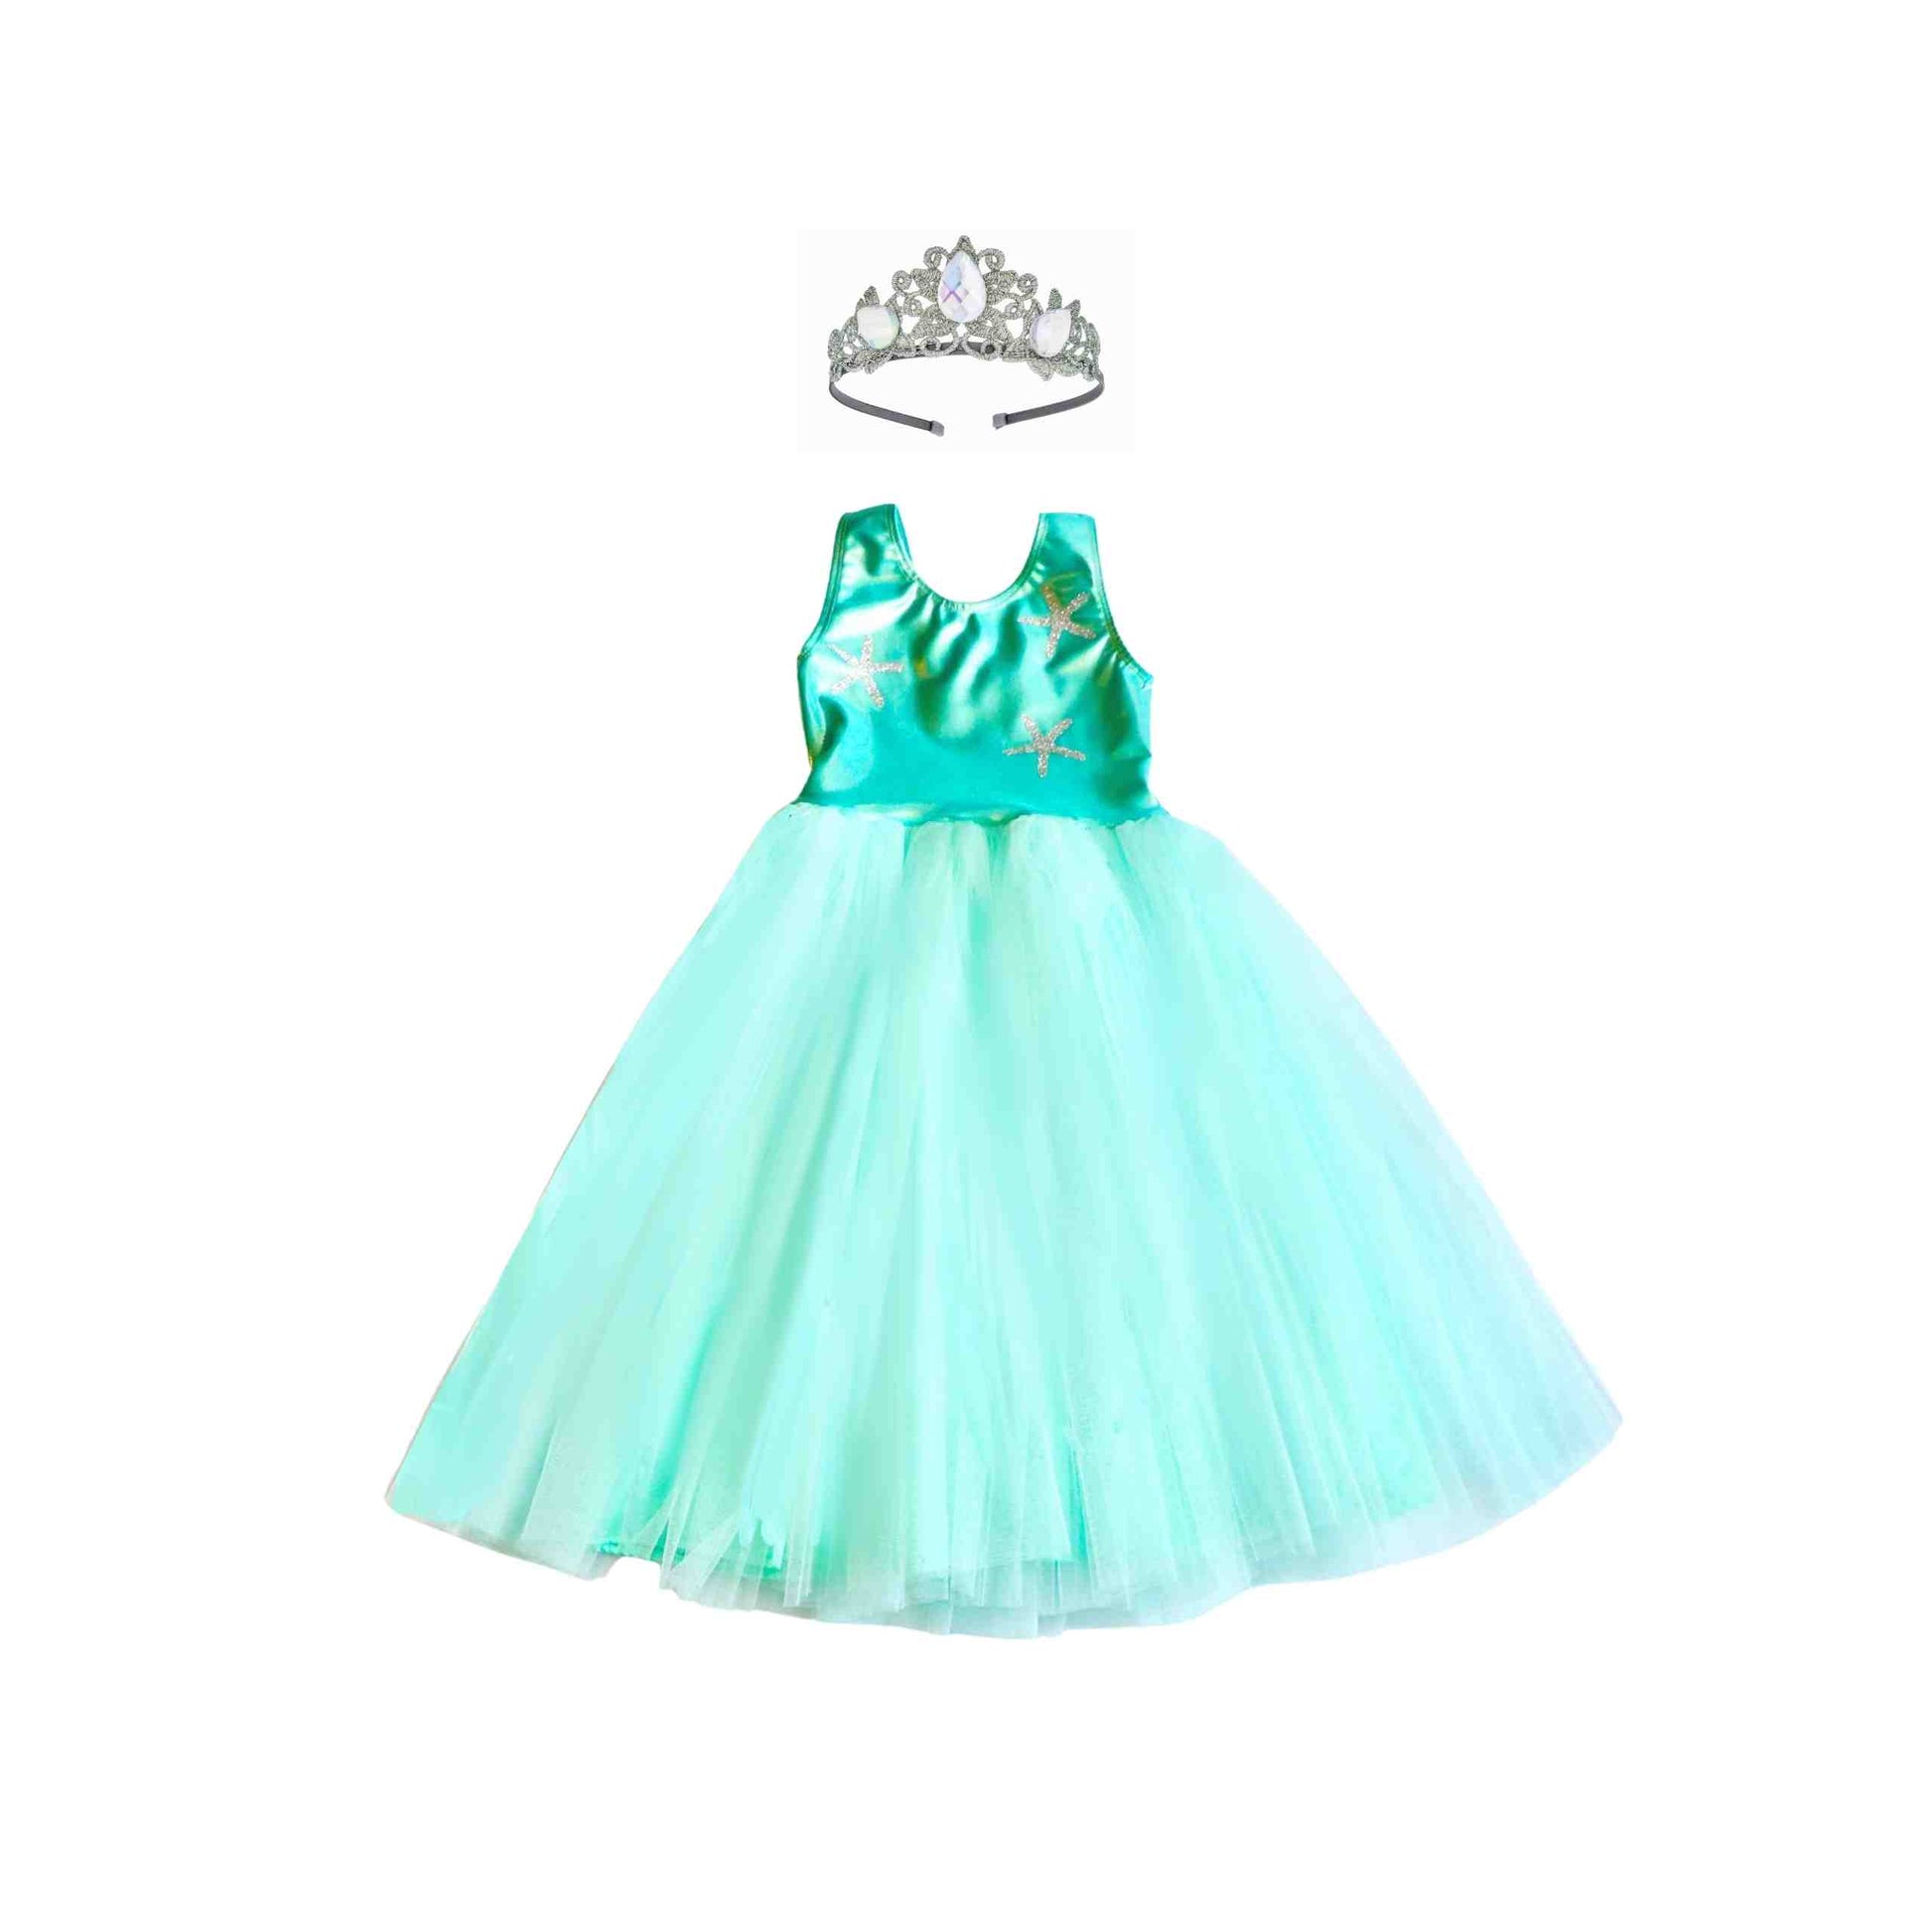 a little girl wearing a green dress and a tiara